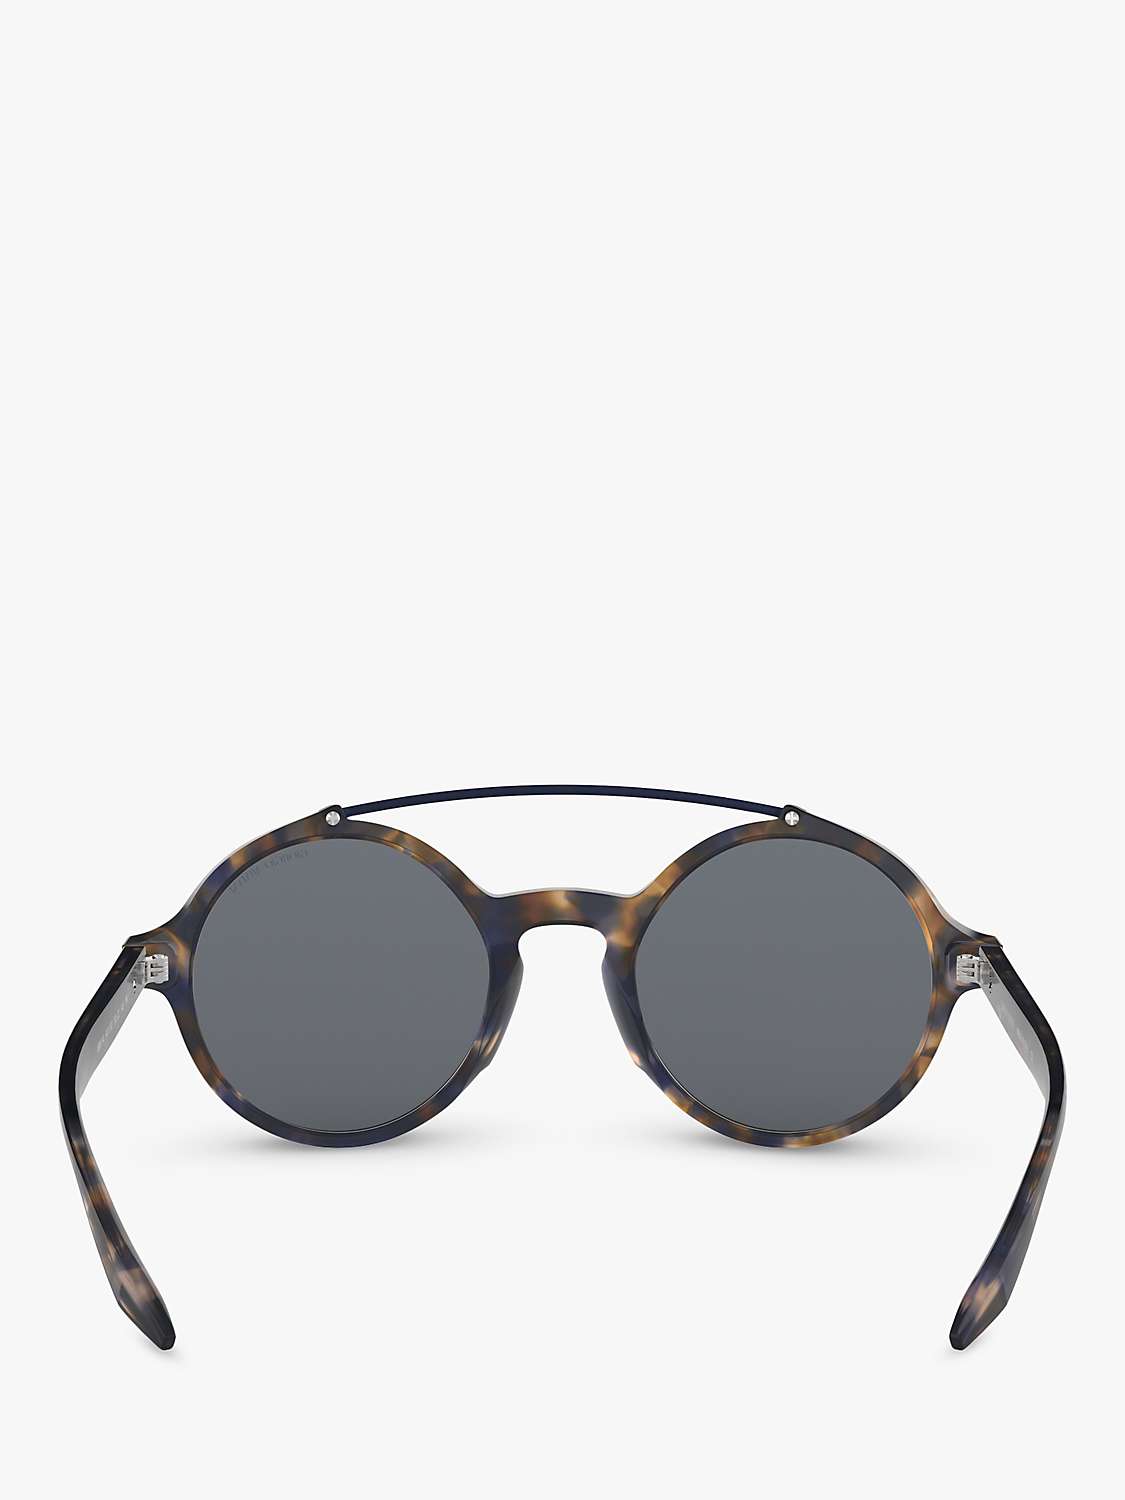 Buy Giorgio Armani AR8114 Men's Round Sunglasses, Navy Havana/Grey Online at johnlewis.com